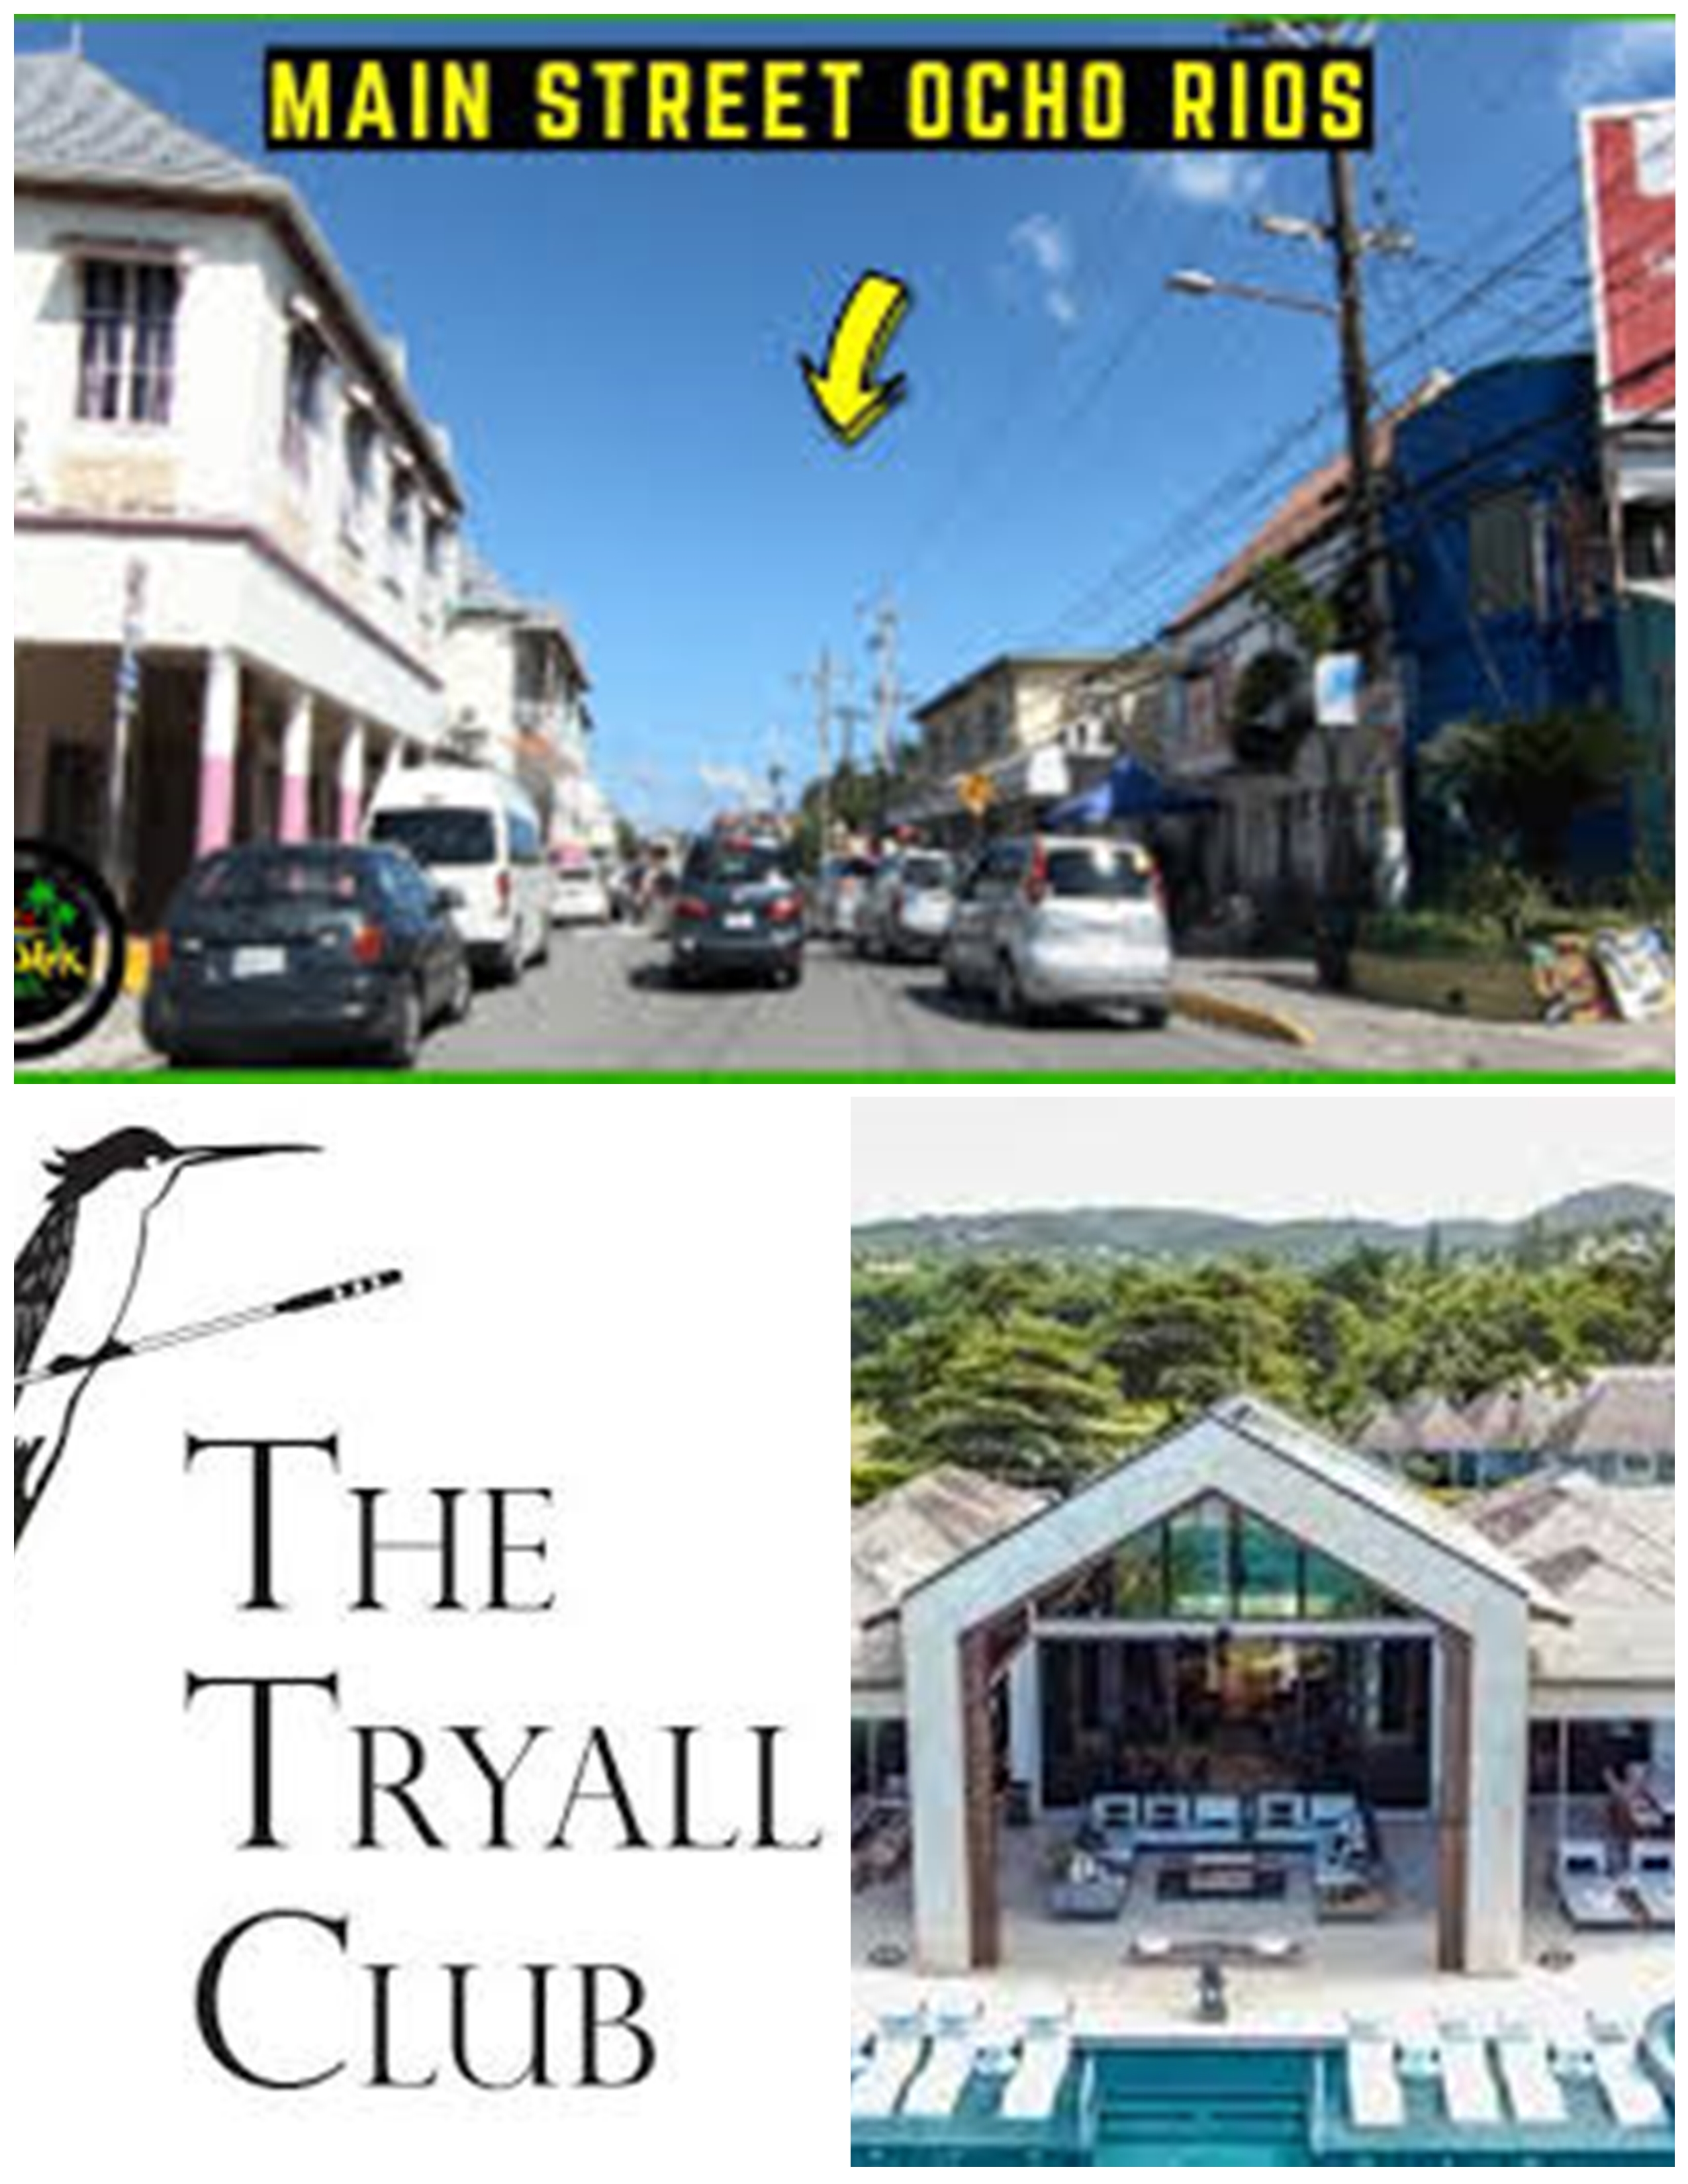 From Ocho Rios MainStreet - The Tryall Club ( Round Trip)